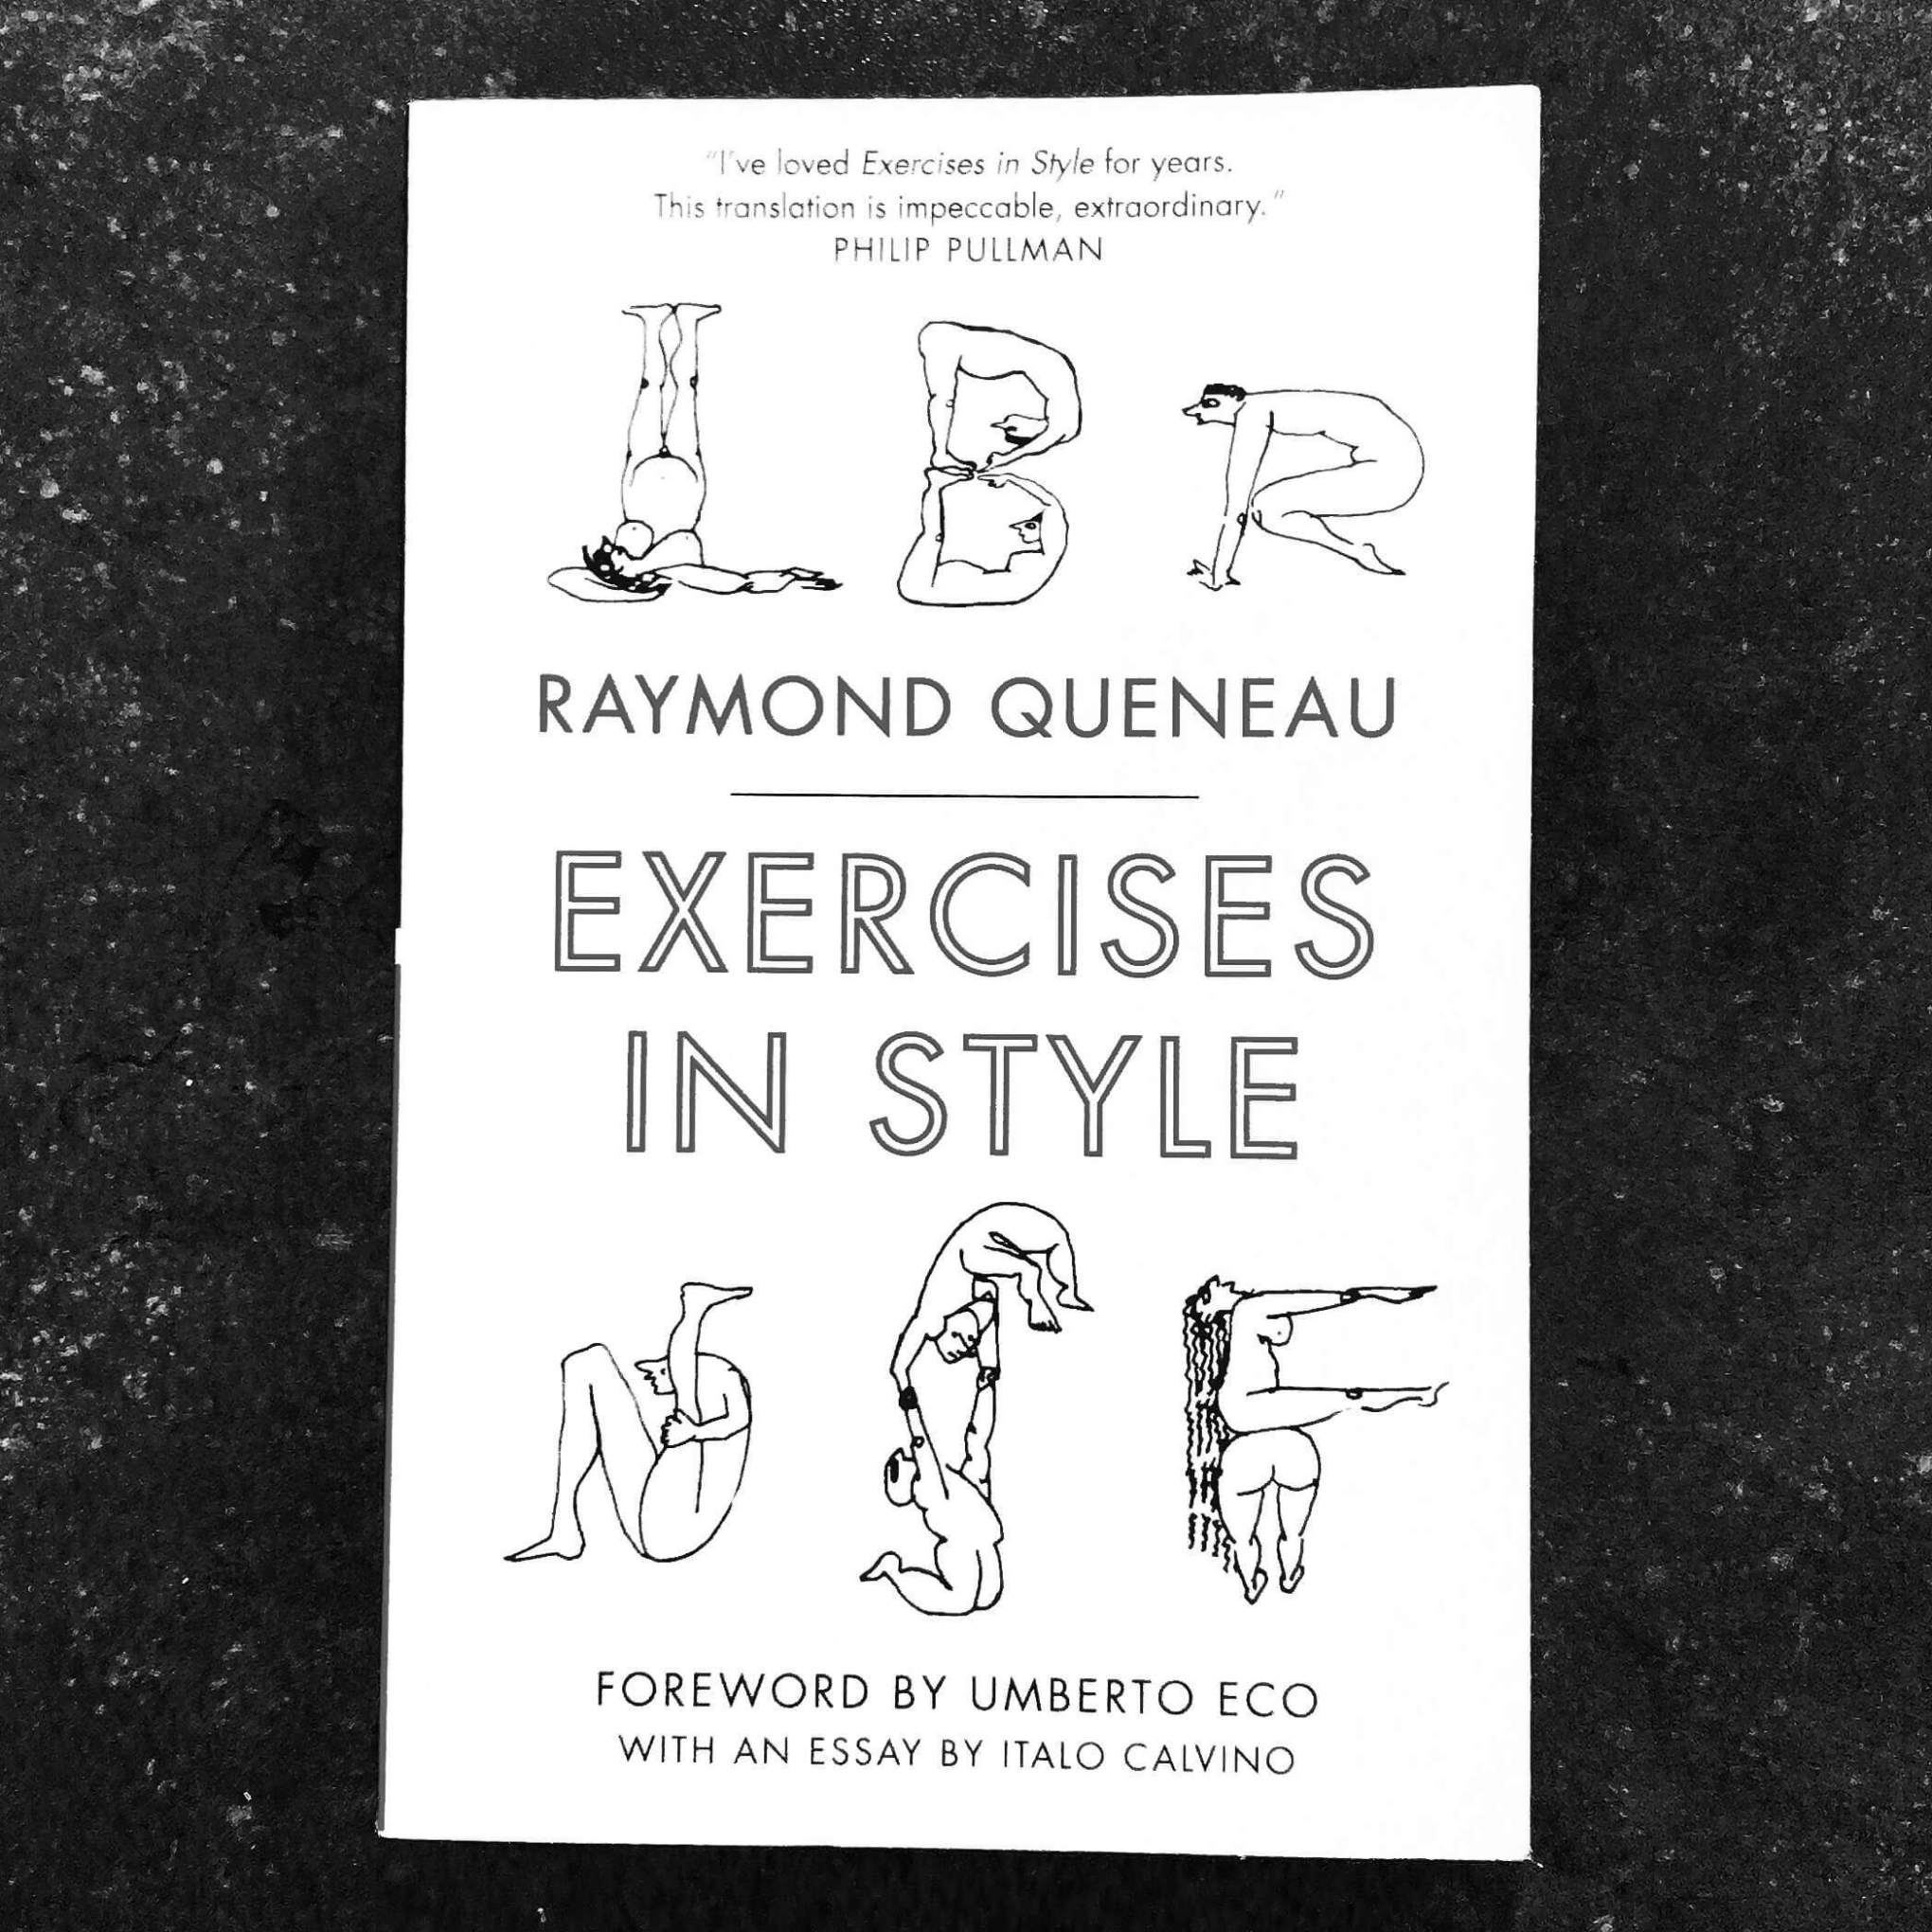 Raymond Queneau's Exercises in Style